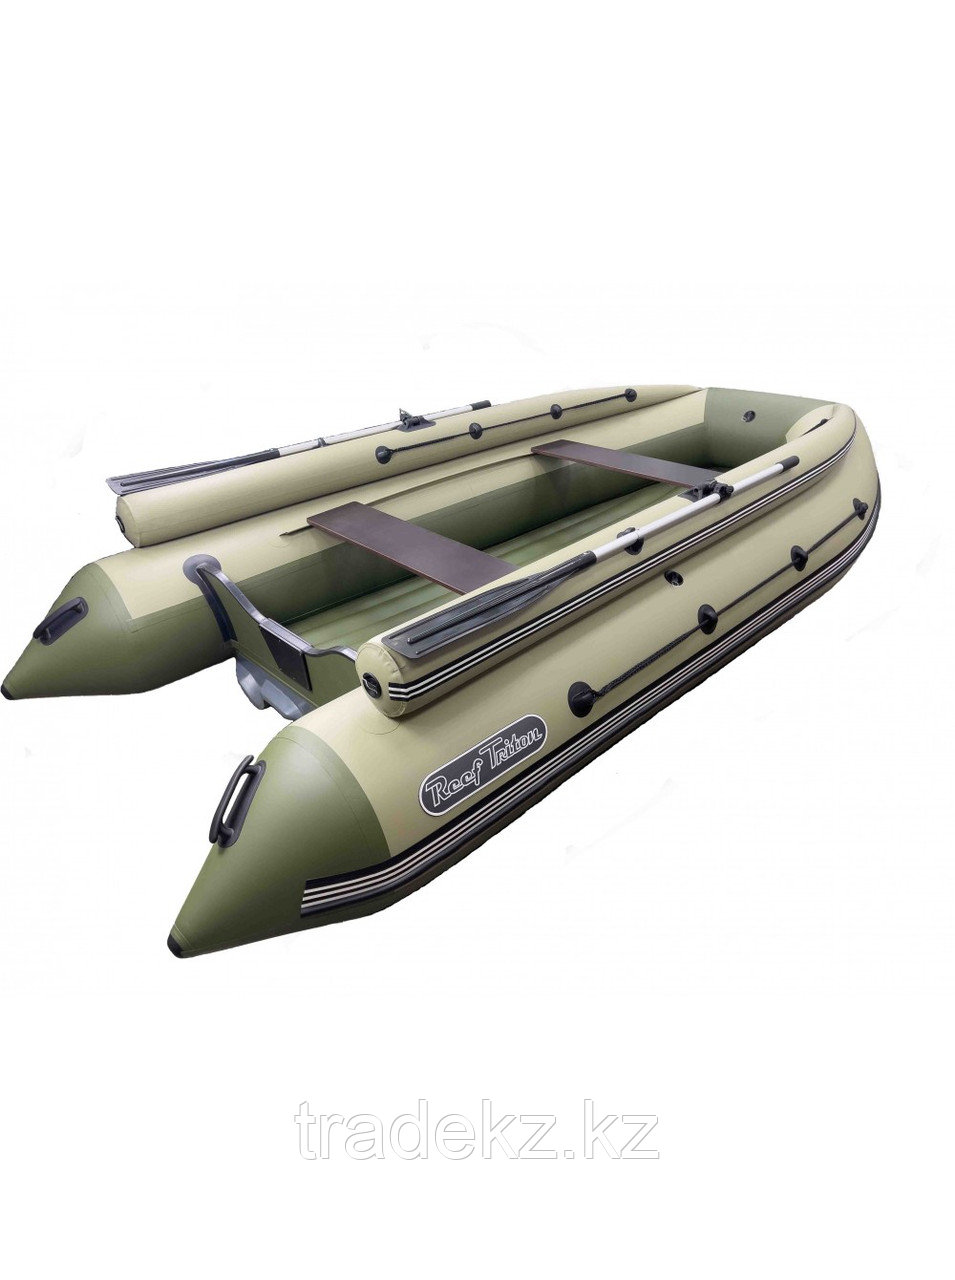 Лодка REEF-390 F НД ТРИТОН бежевый/зеленый стеклопластиковый интерцептер